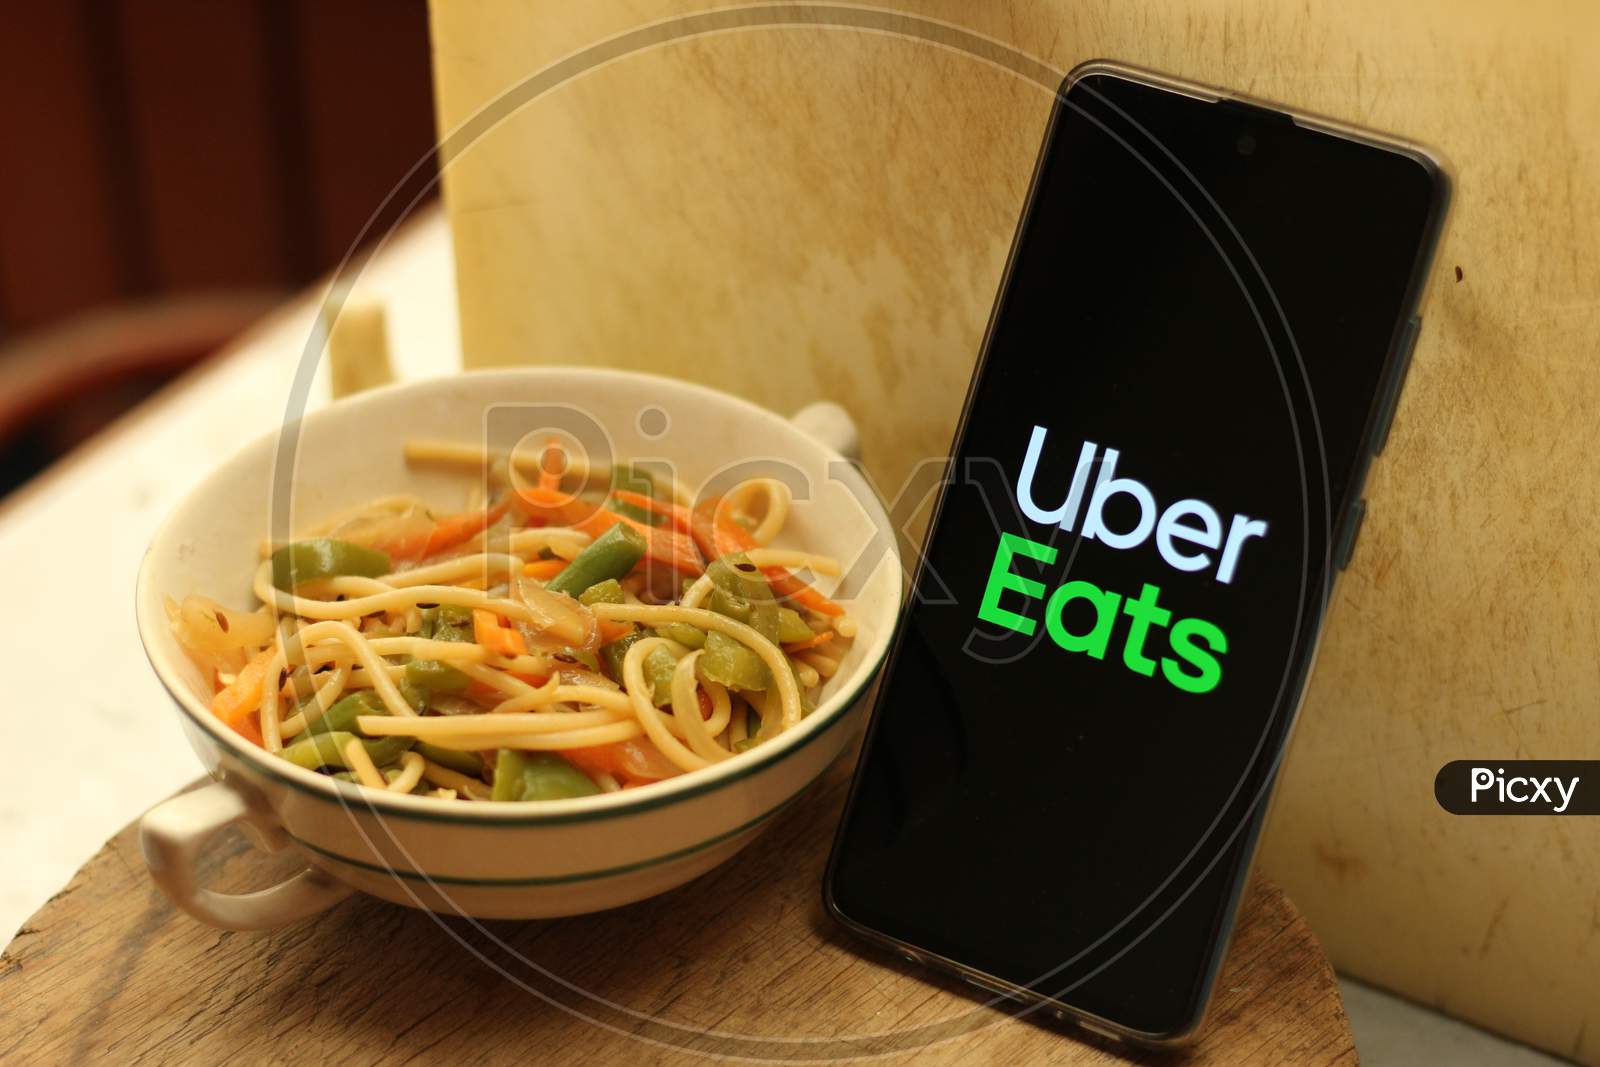 Uber eats application icon on smartphone.